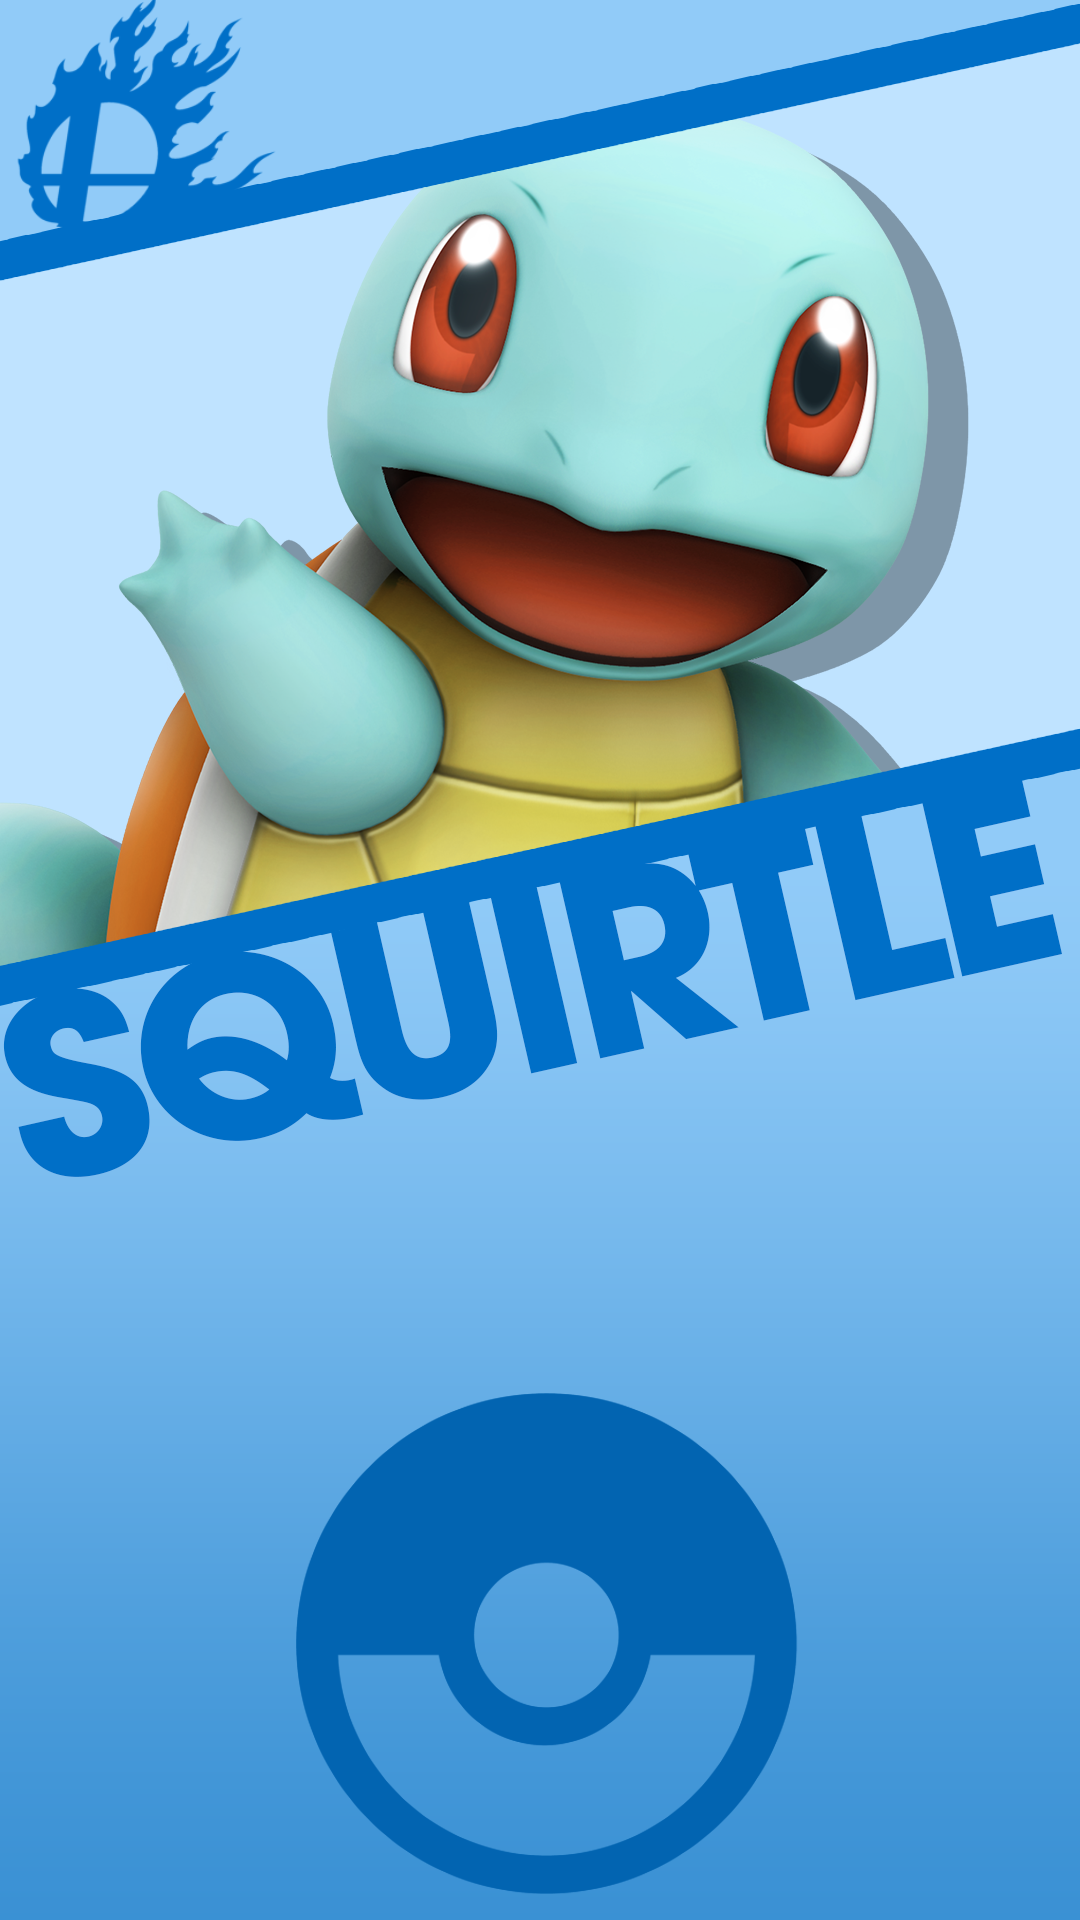 Squirtle Smash Phone Wallpaper by MrThatKidAlex24 on DeviantArt